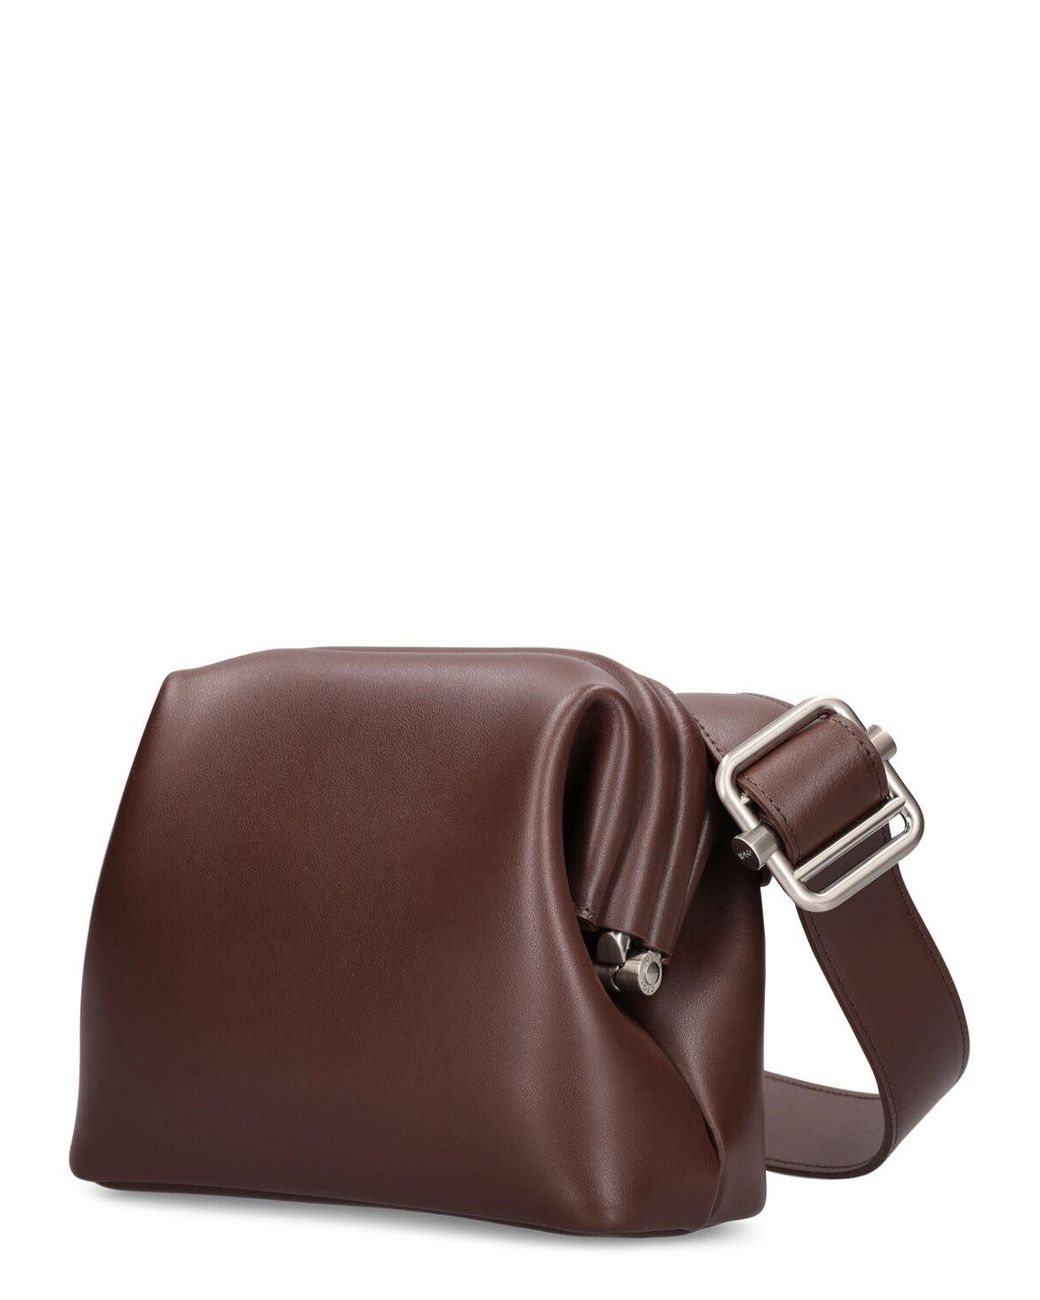 OSOI Mini Brot Leather Shoulder Bag in Brown | Lyst UK